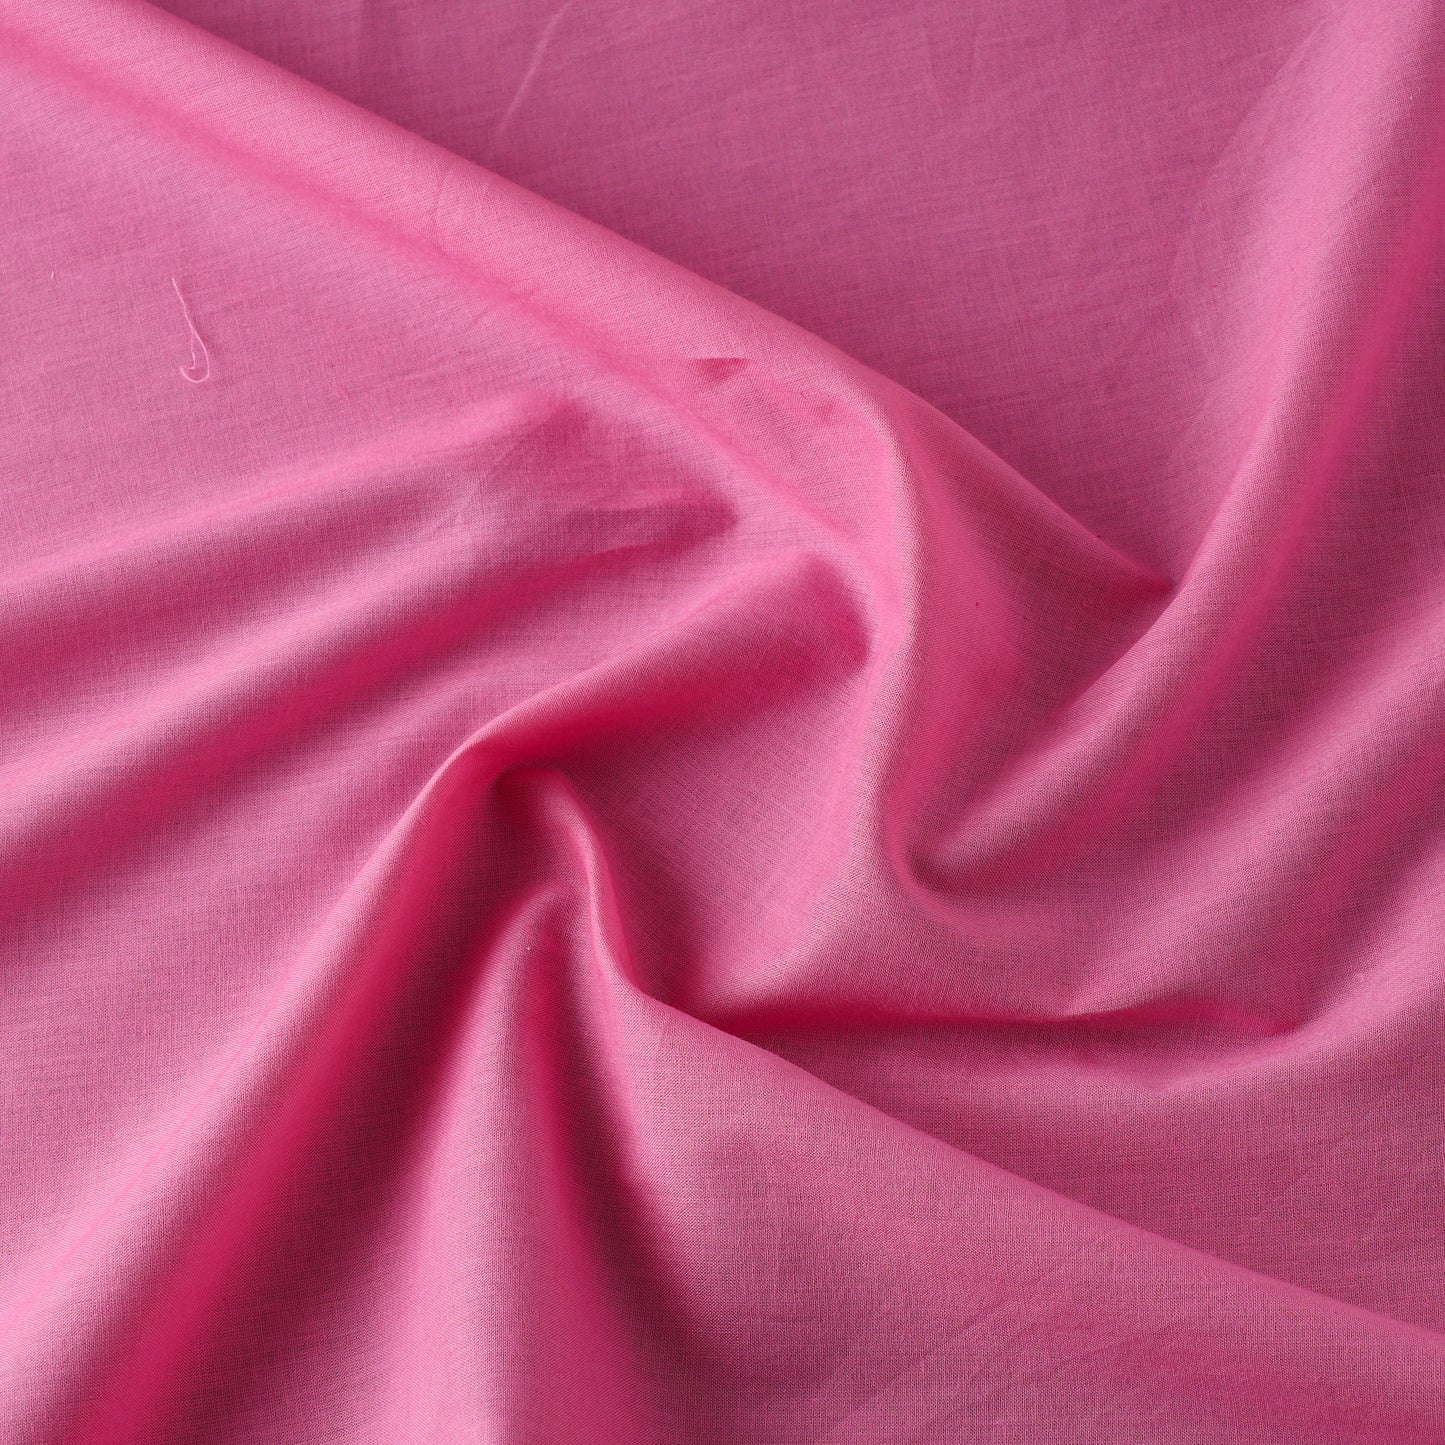 Lavender Pink Prewashed Plain Dyed Cotton Fabric